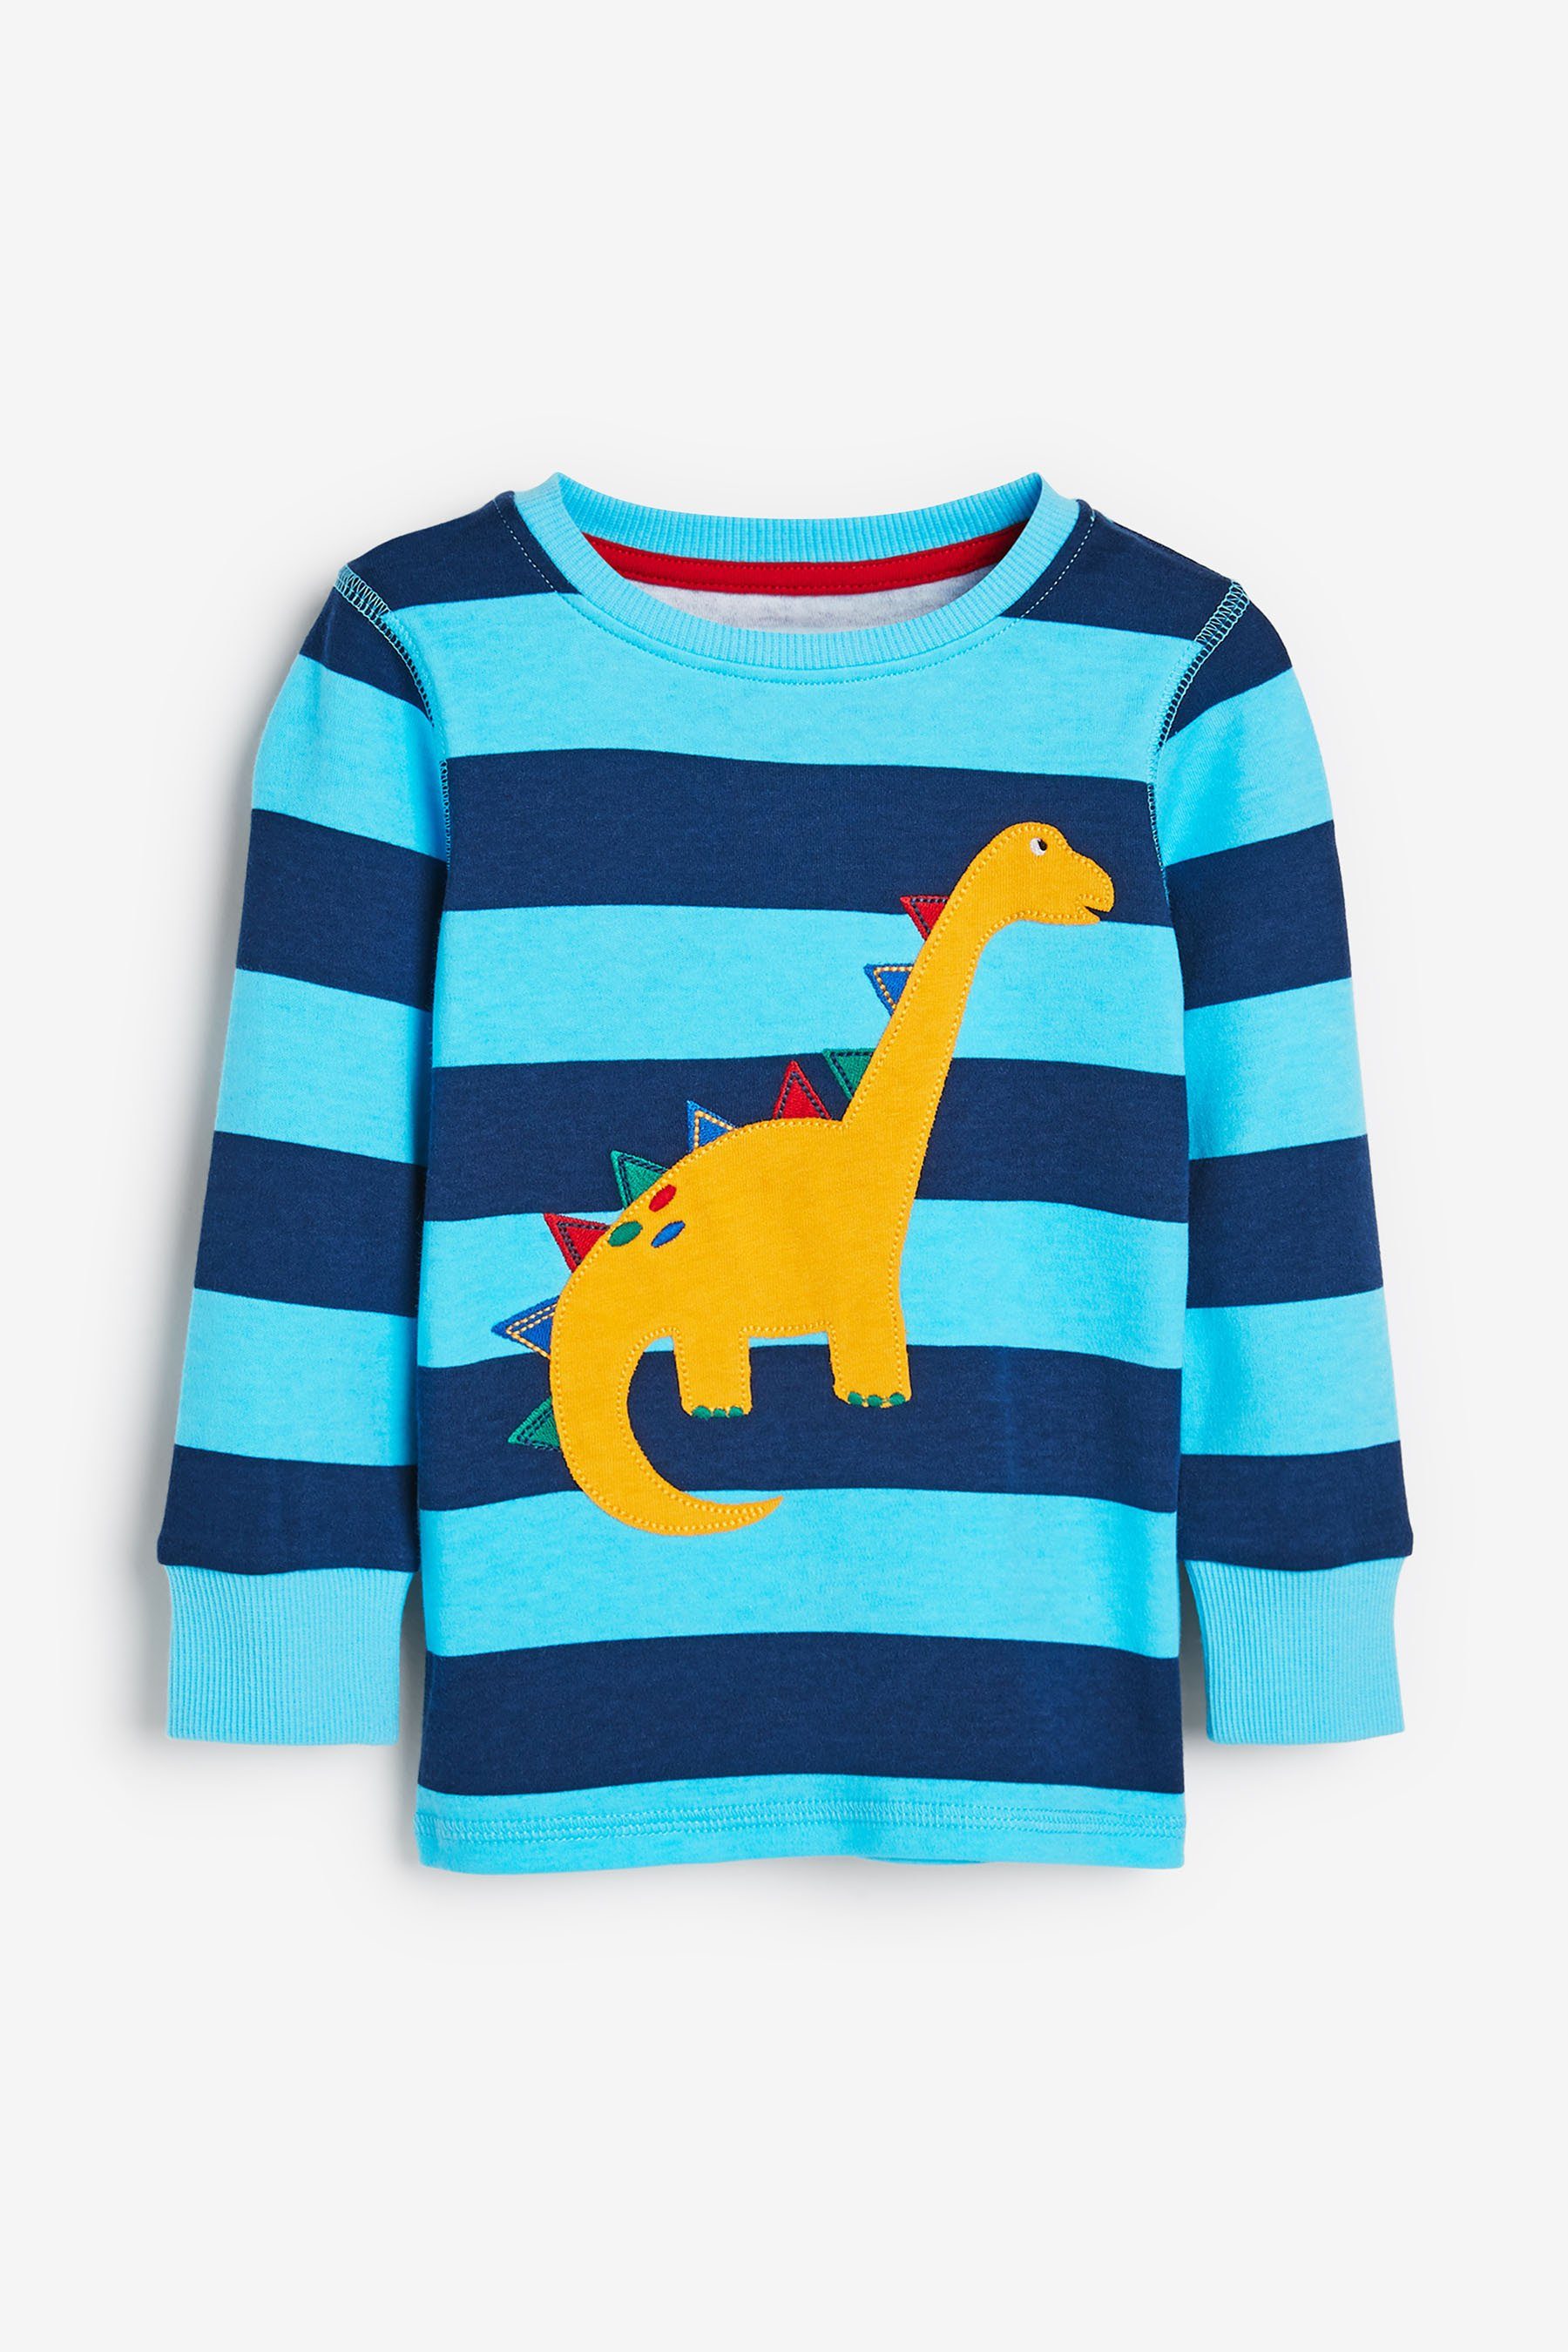 Dino tlg) Blue/Red/Green Pyjama Kuschelpyjamas, Stripe Next 3er-Pack (6